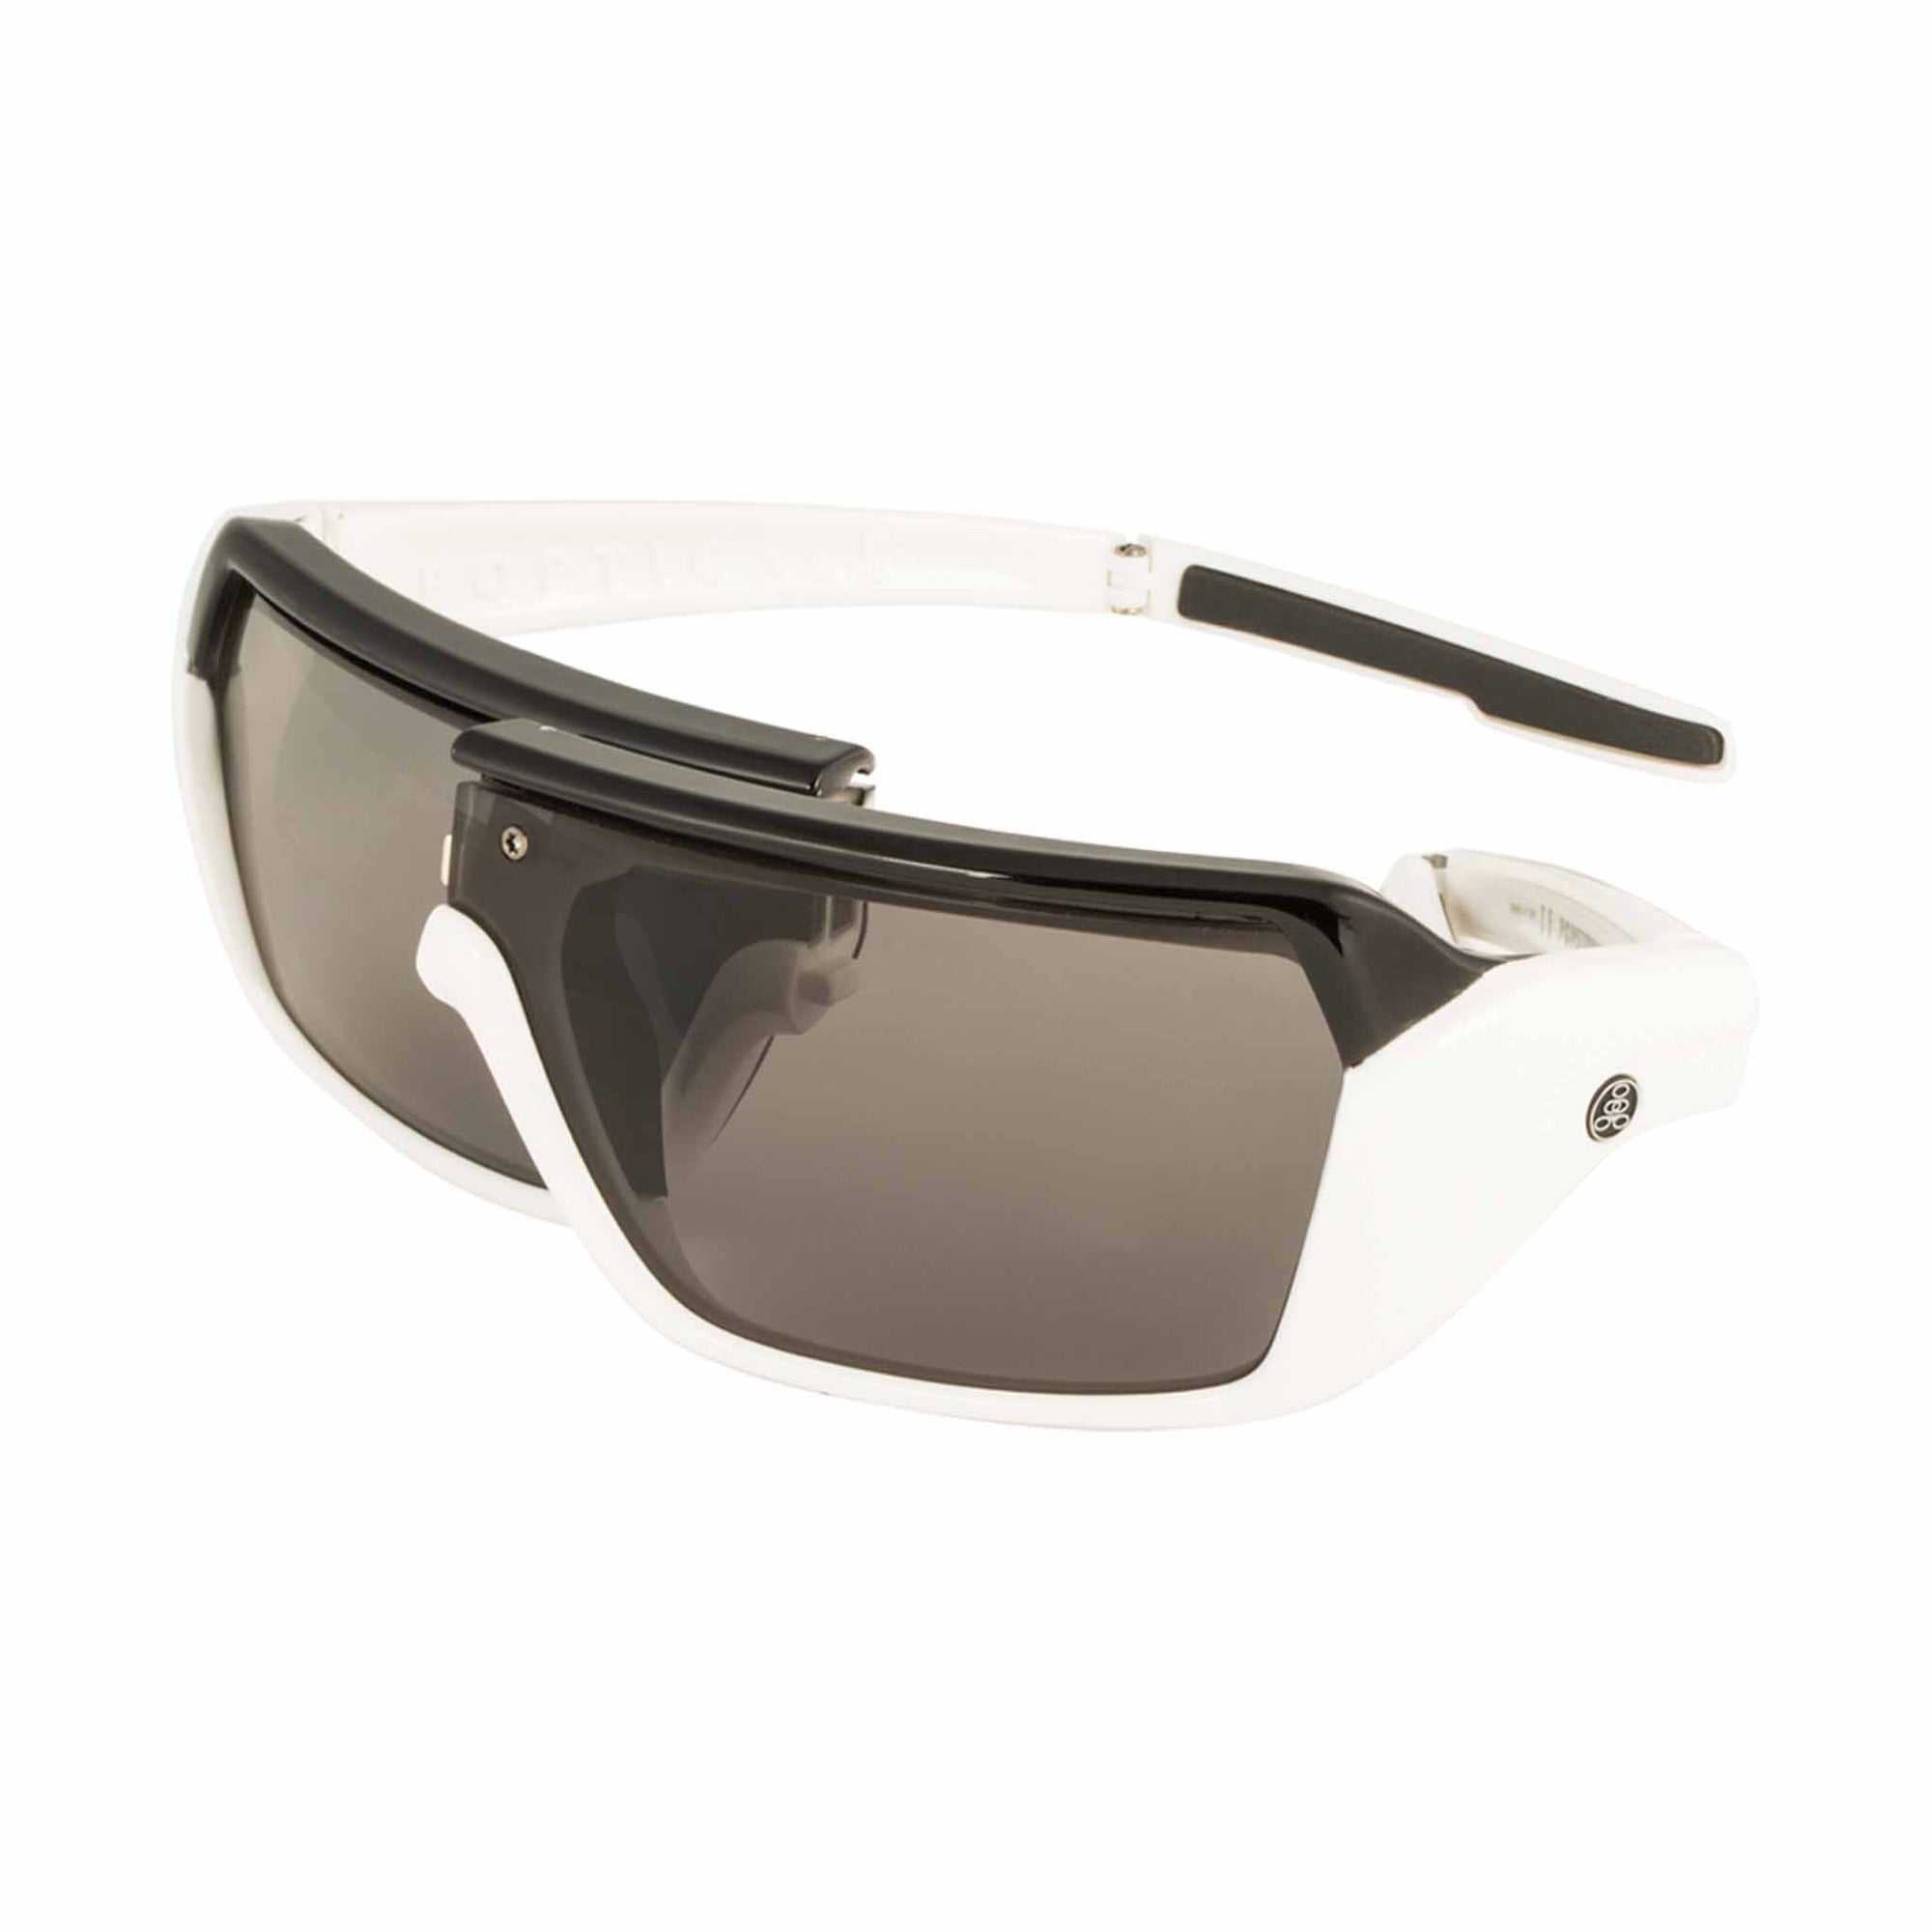 Popticals, Premium Compact Sunglasses, PopStorm, 010060-RBGP, Polarized Sunglasses, Gloss Black/Red Frame, Gray Lenses, Glam View